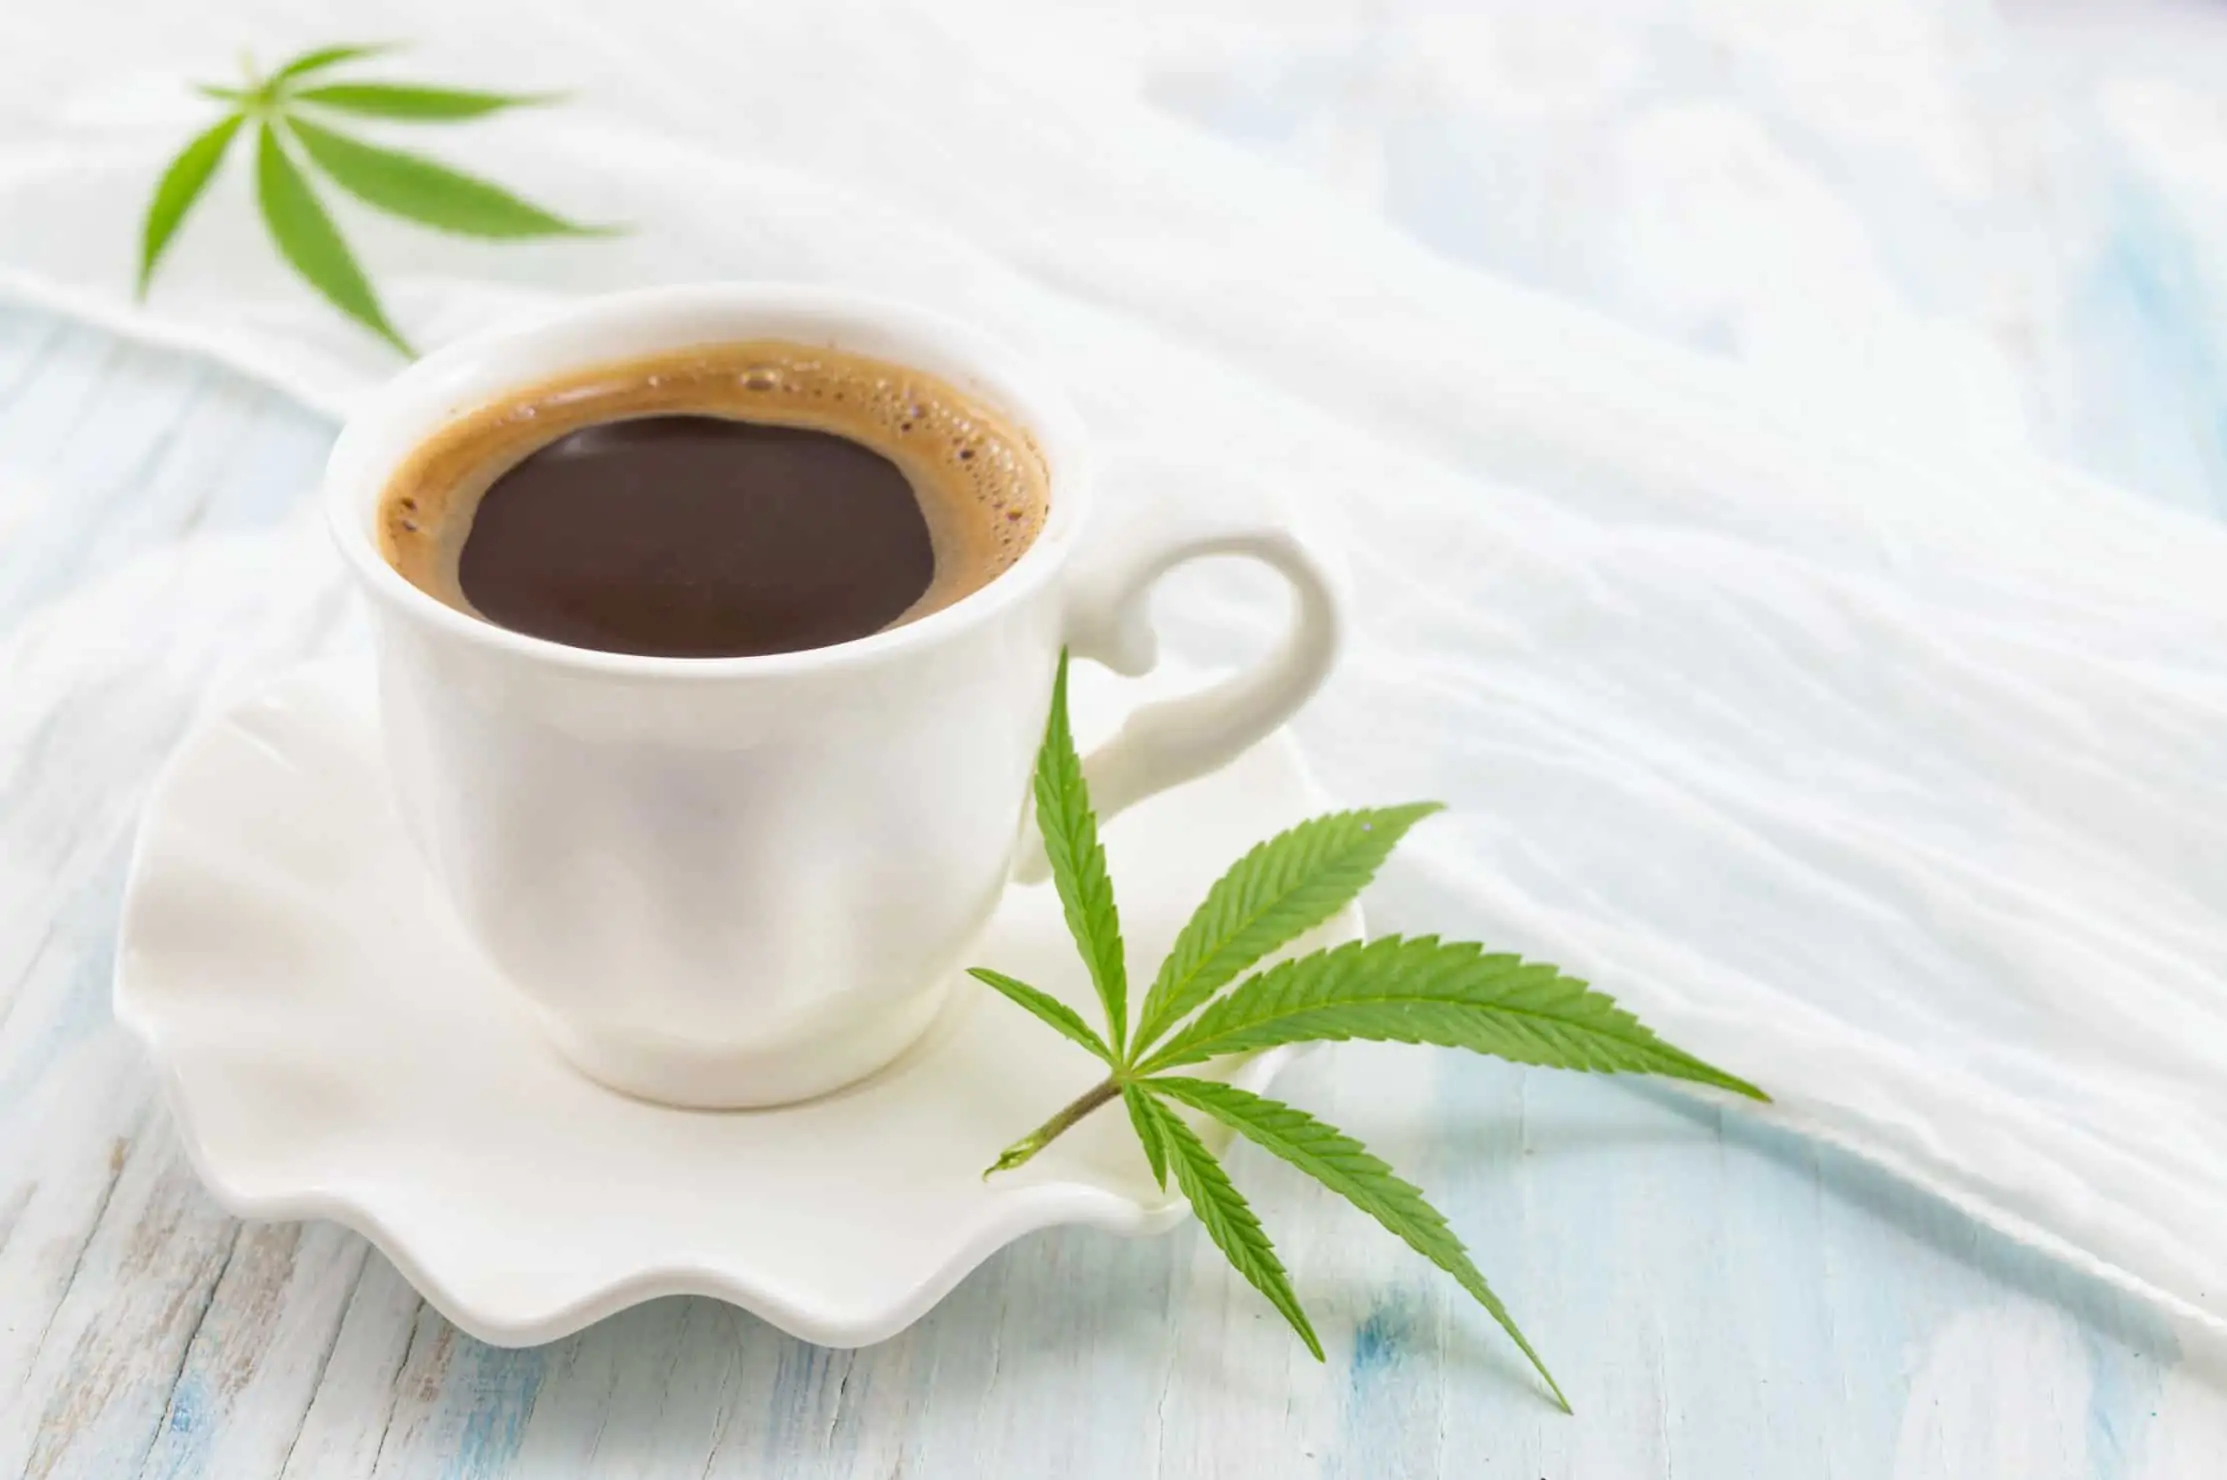 Does coffee affect a marijuana high? Cup of coffee with marijuana leaves